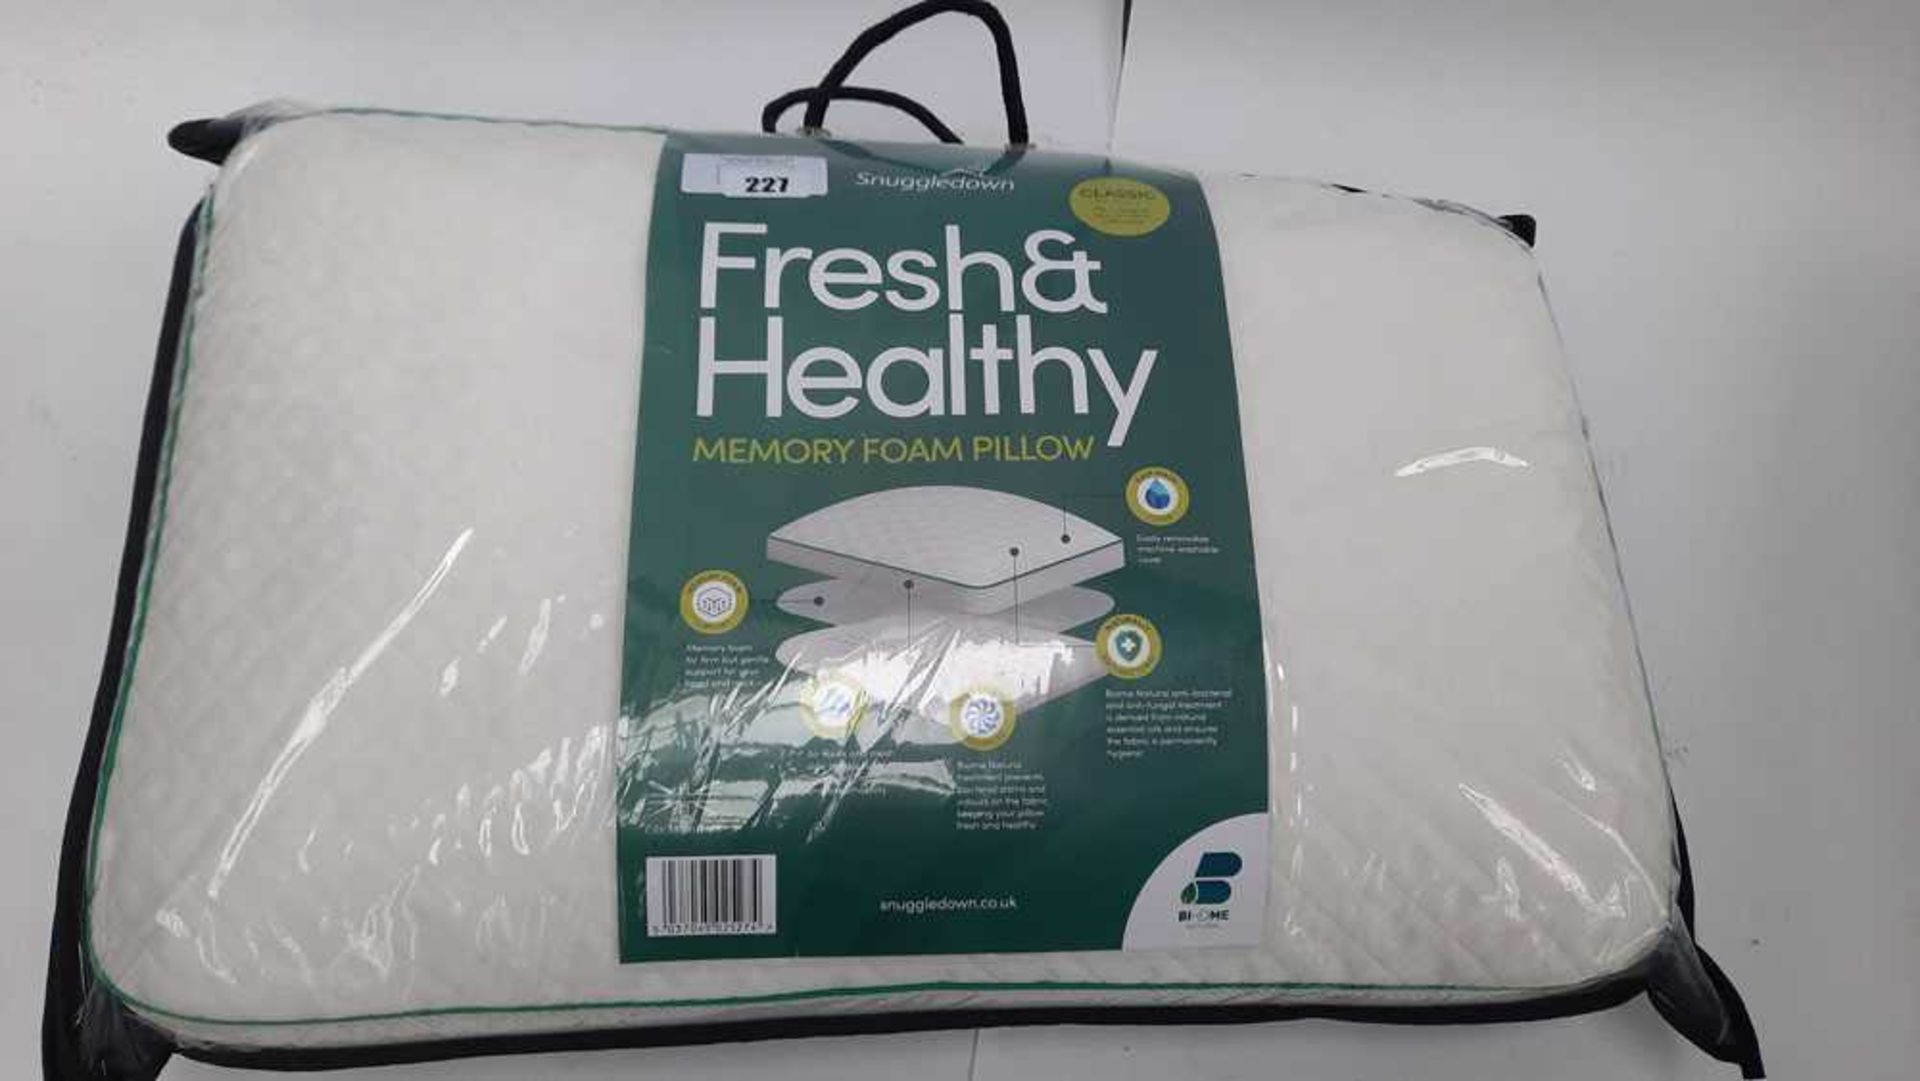 +VAT Snuggle Down fresh and healthy memory foam pillow in bag